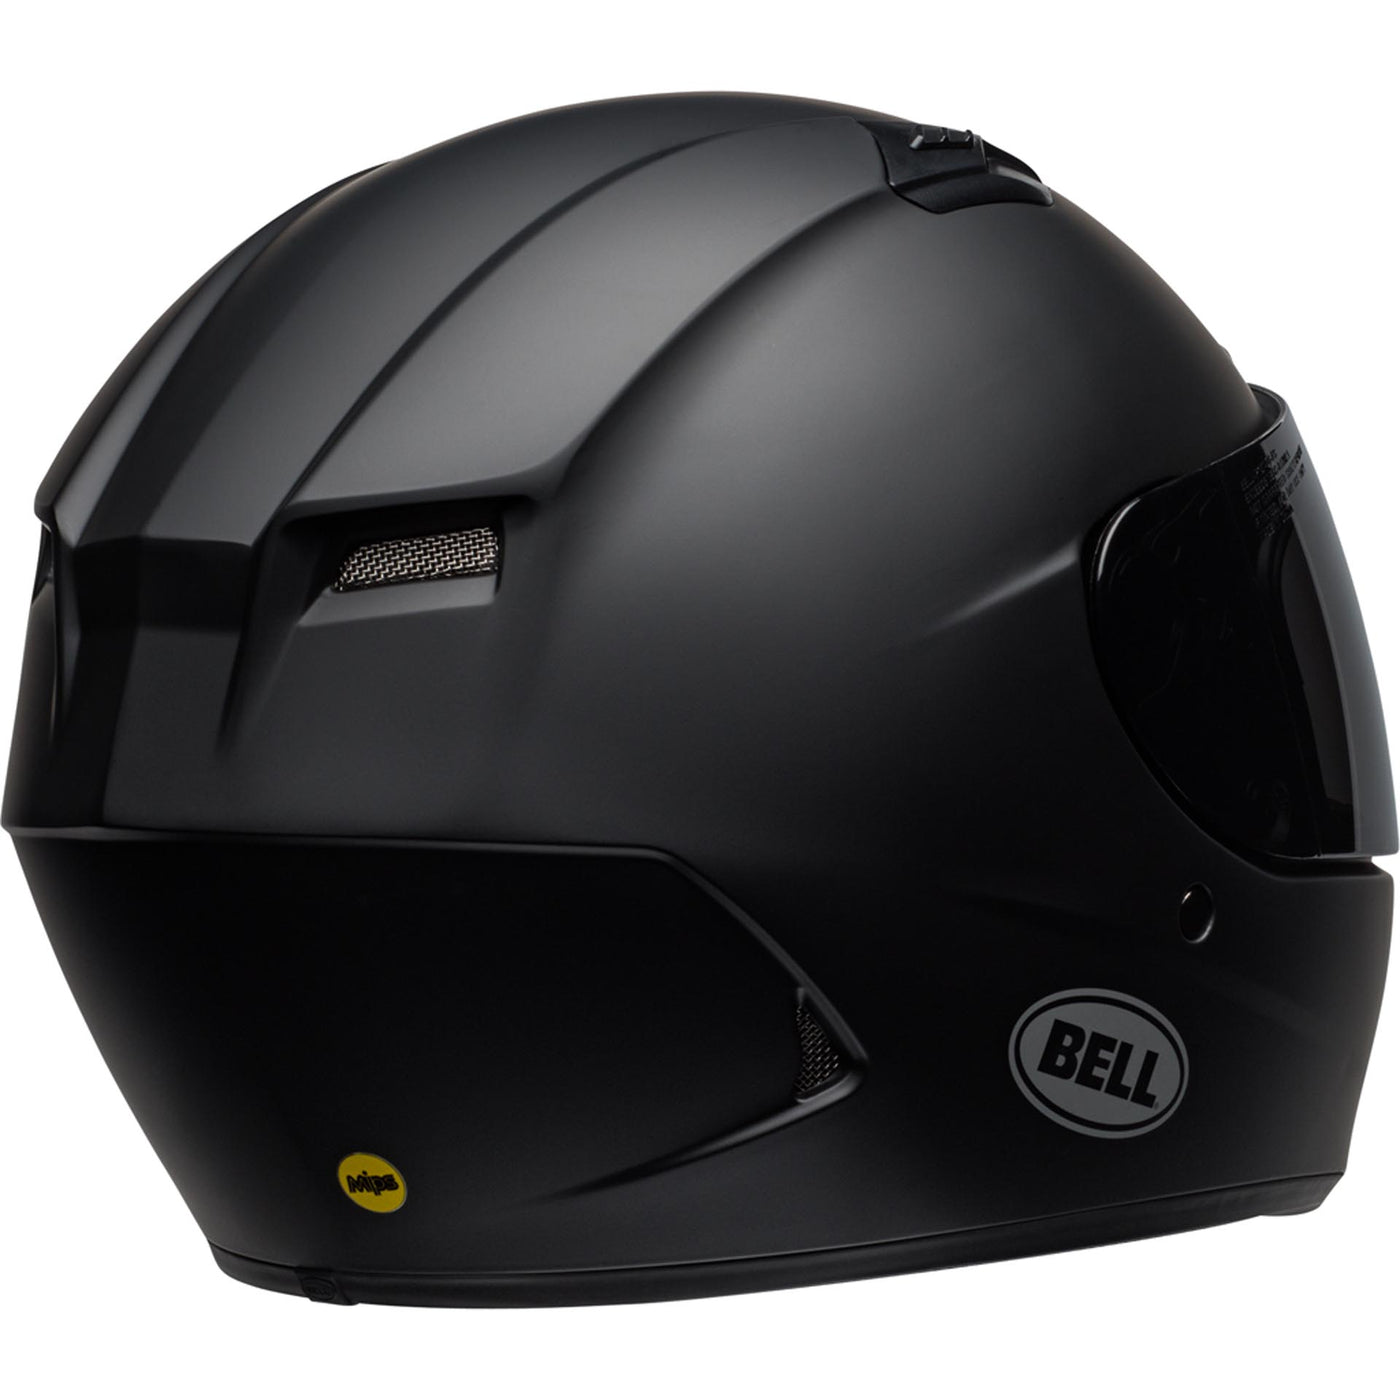 Bell Qualifier DLX MIPS Motorcycle Full Face Helmet Matte Black